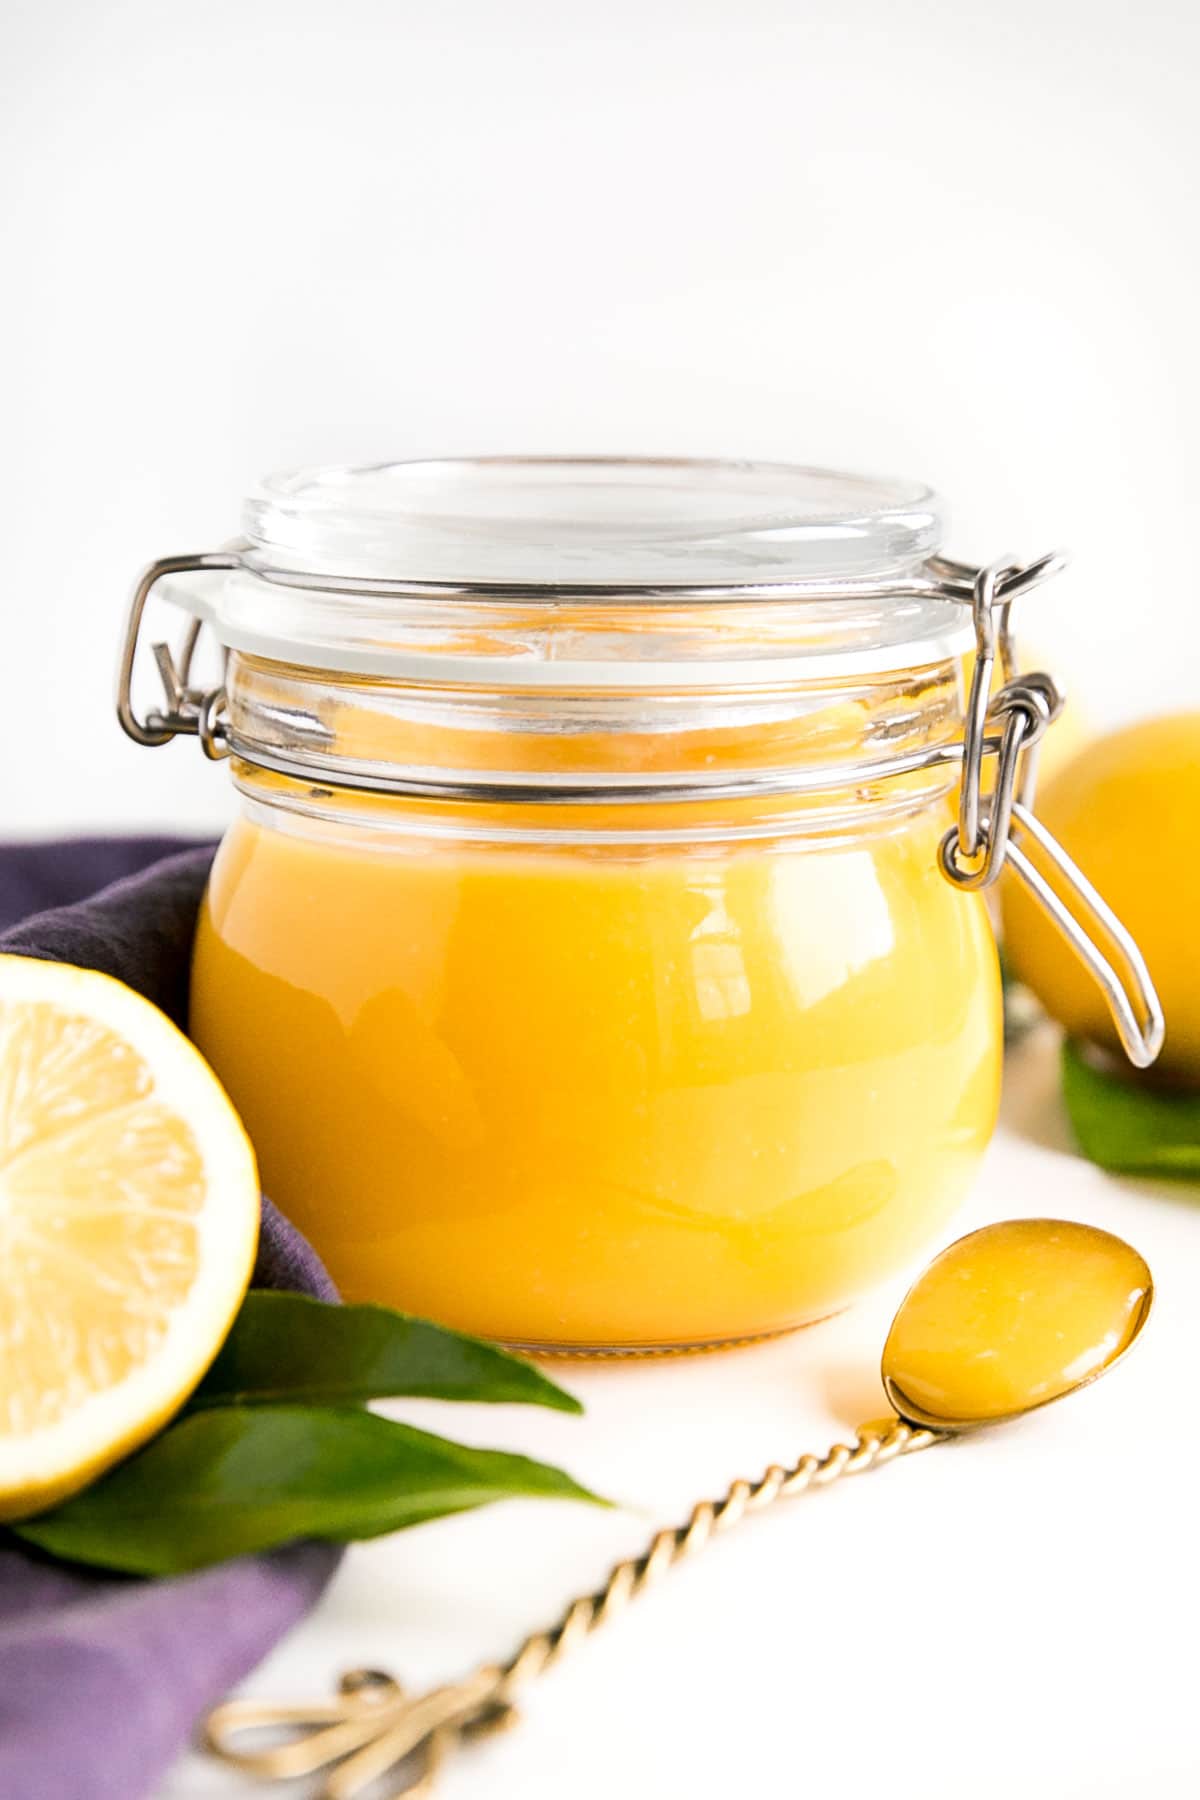 Lemon curd in a glass jar.